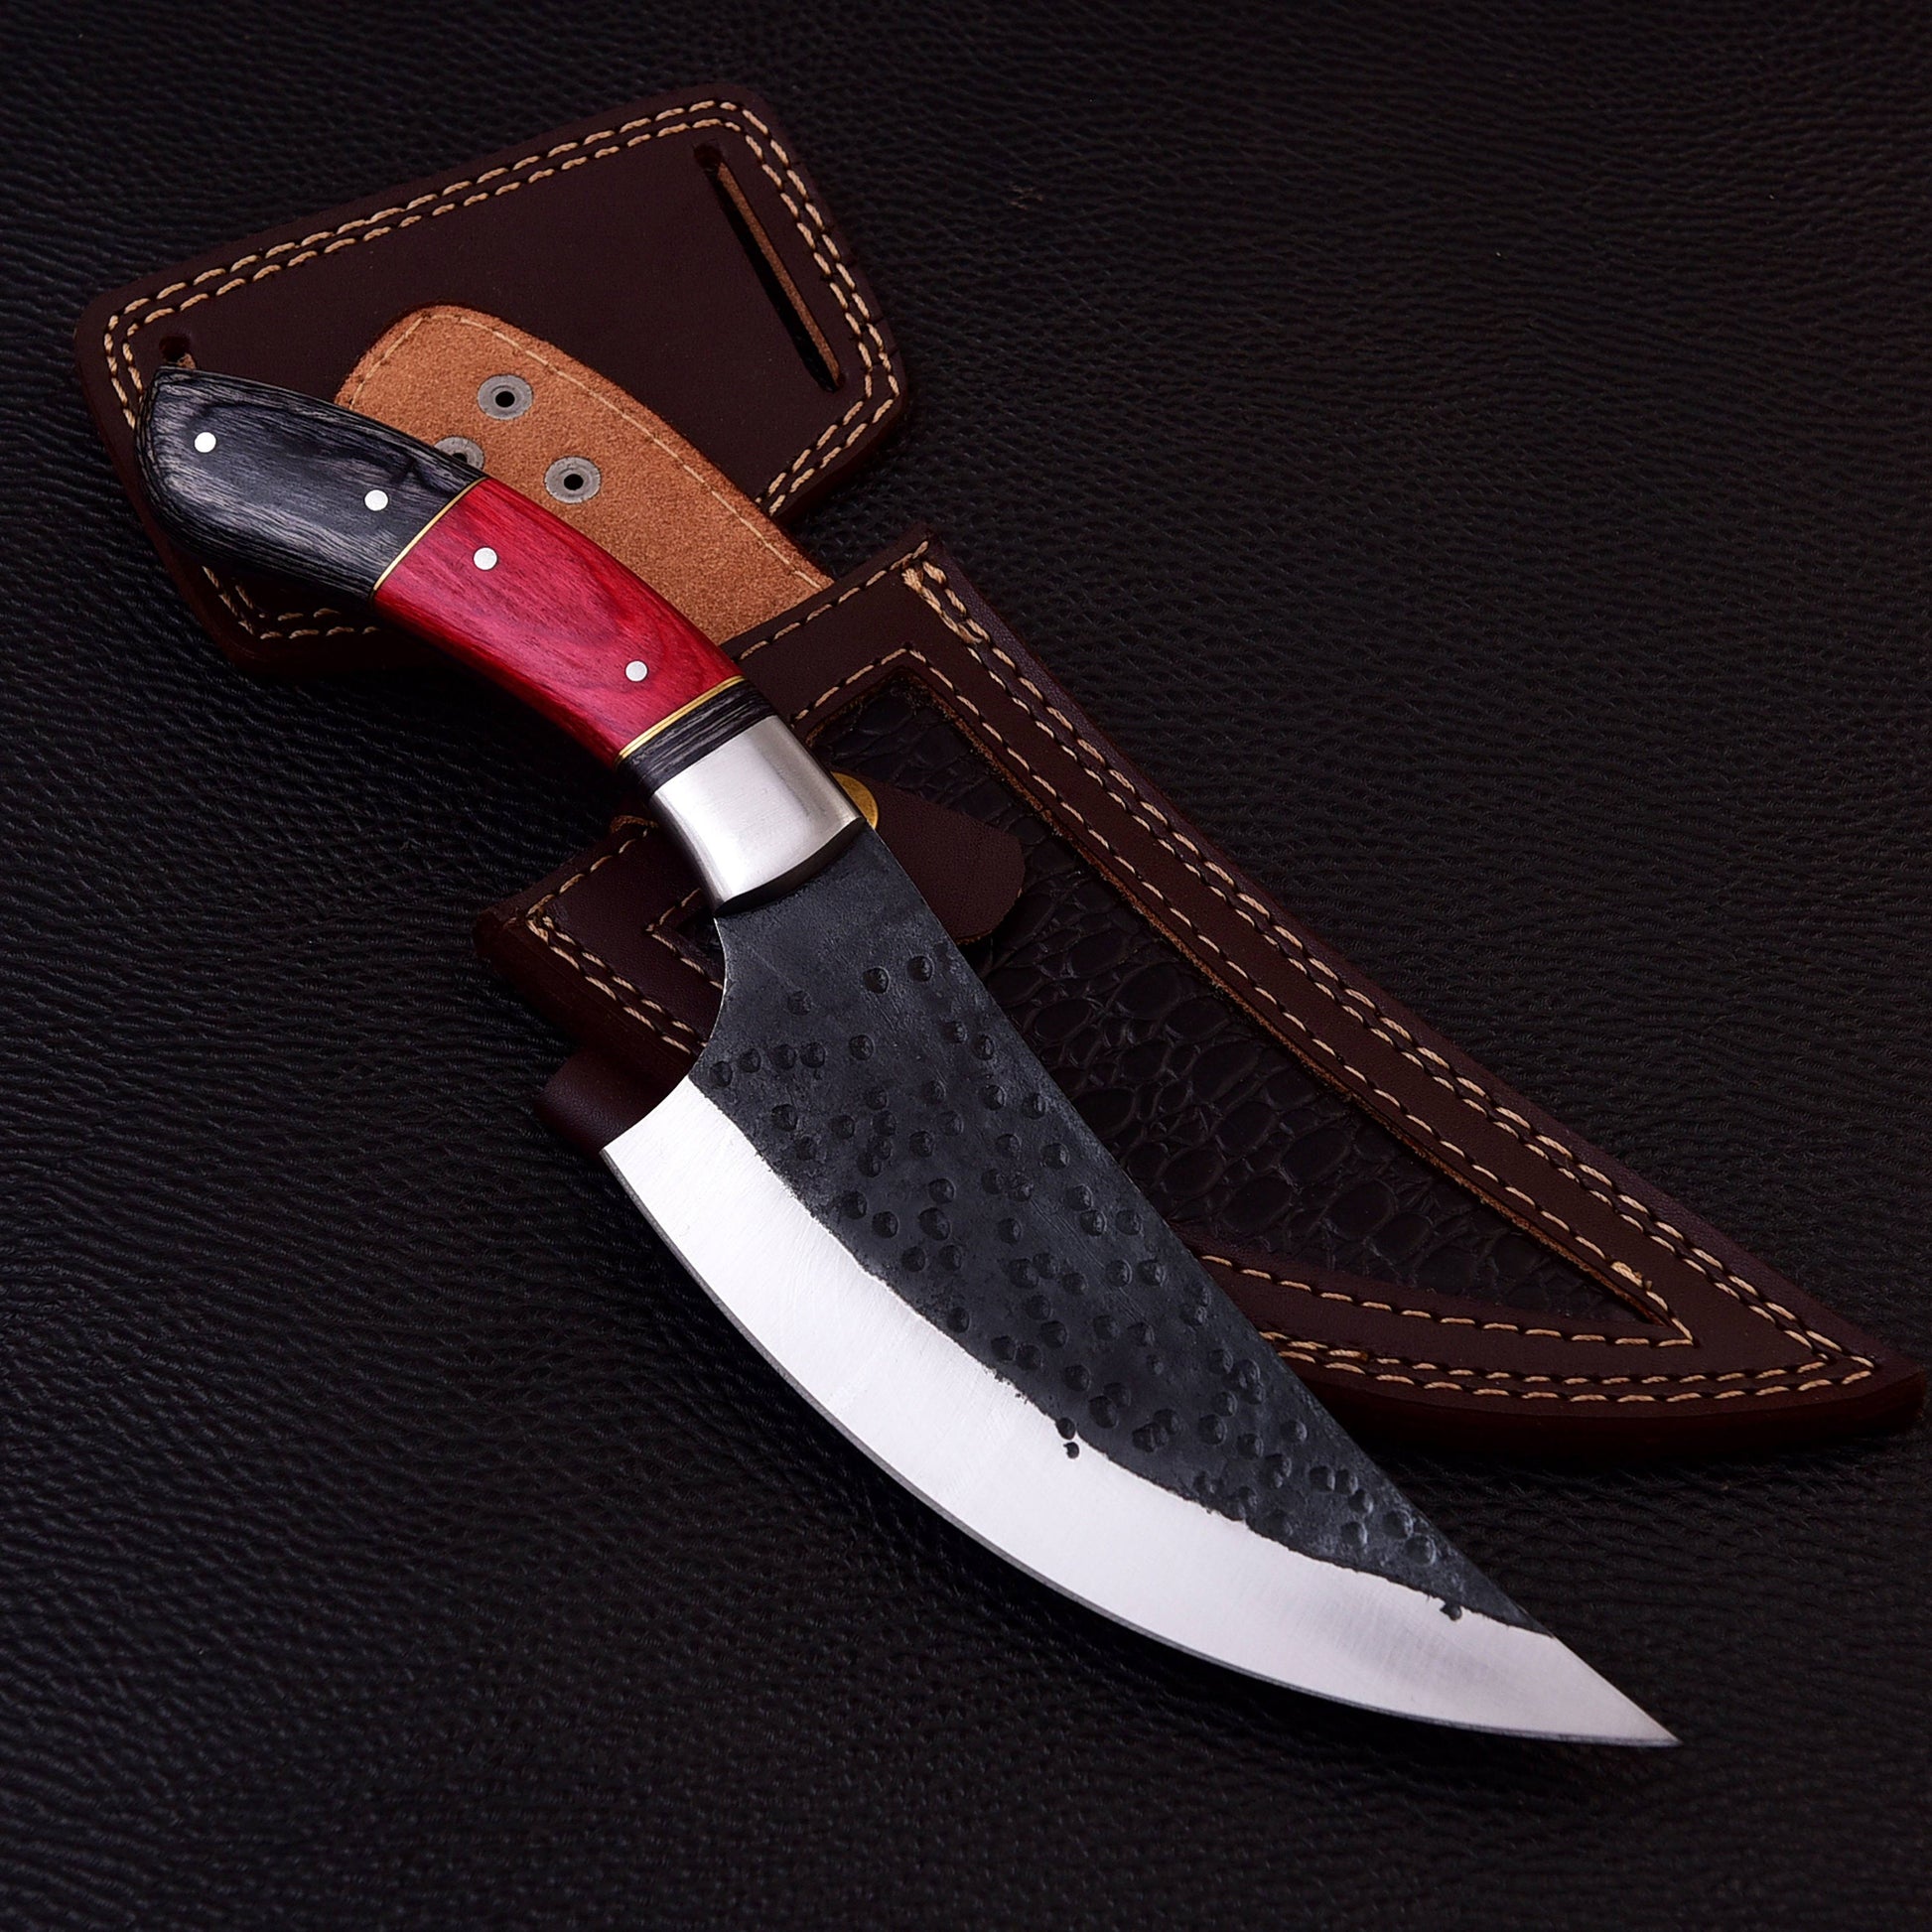 High Carbon Steel Blade Skinner Knife - 10.5" Custom Skinning Knife Full Tang Hunting Engraved Knives Gift for Him Leather Sheath Included